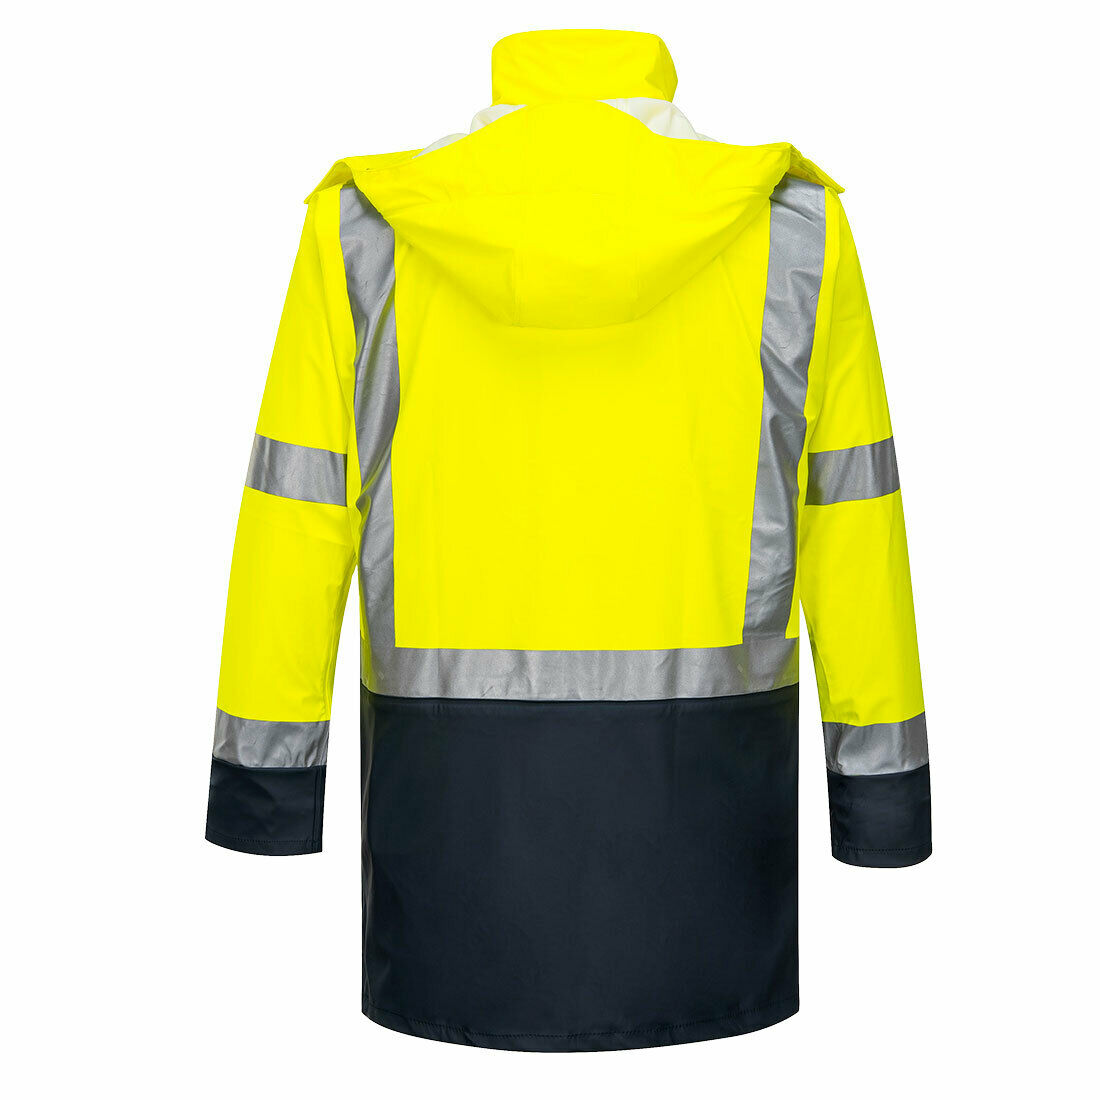 Portwest Mens Huski Farmers Hi-Vis Jacket Waterproof Breathable Taped K8104